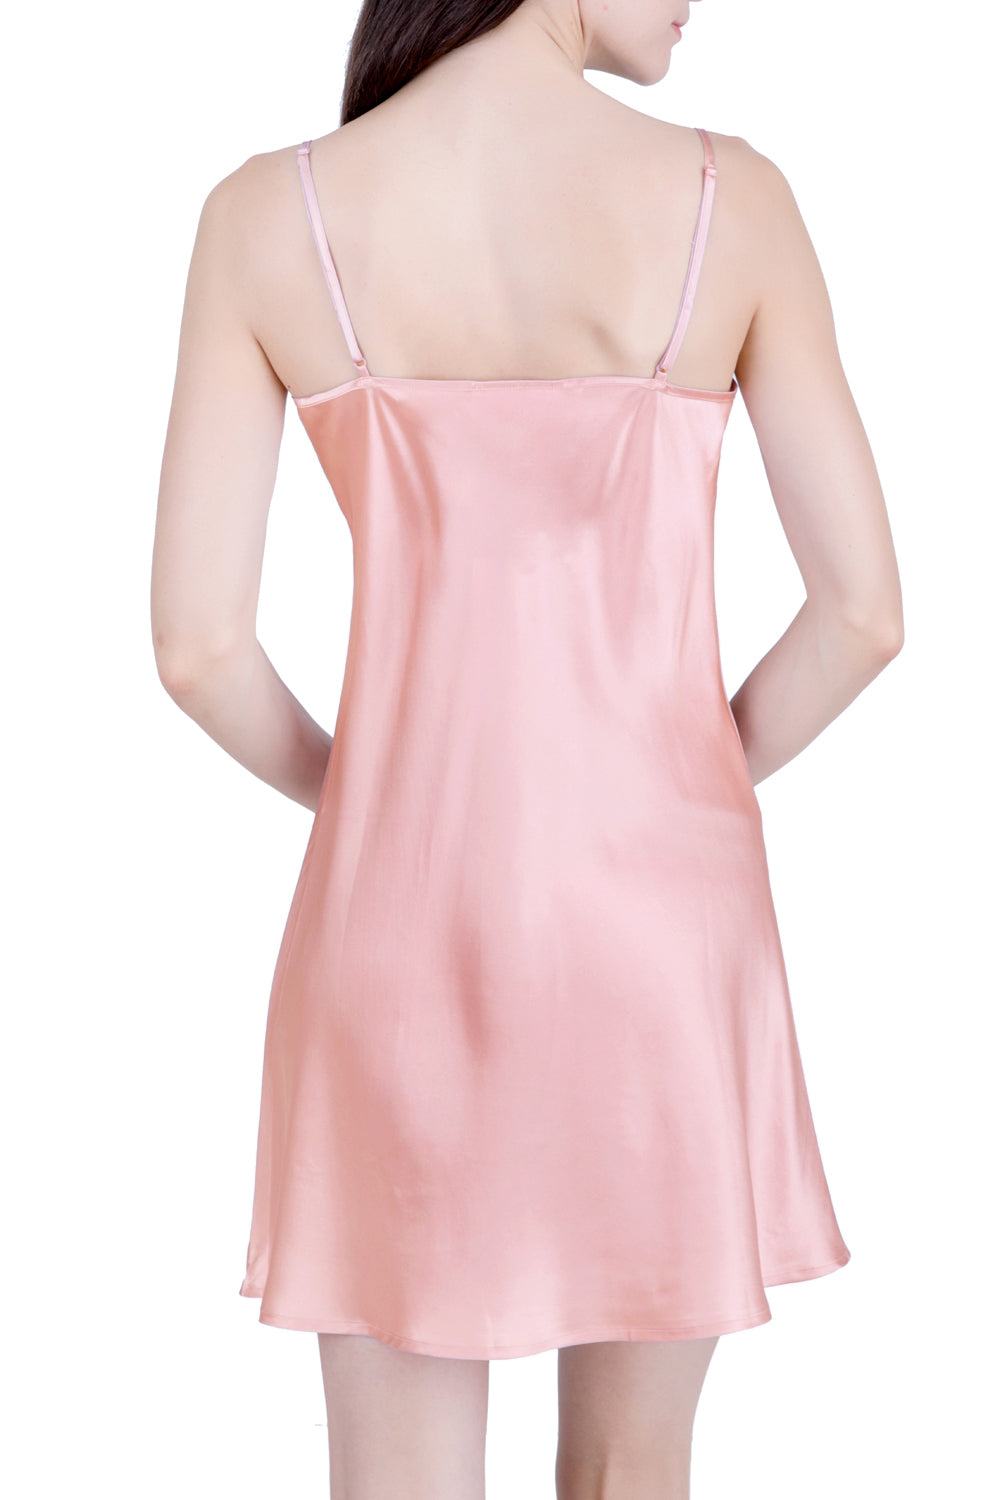 Women's Silk Sleepwear 100% Silk Chemise, Bridal Rose, L